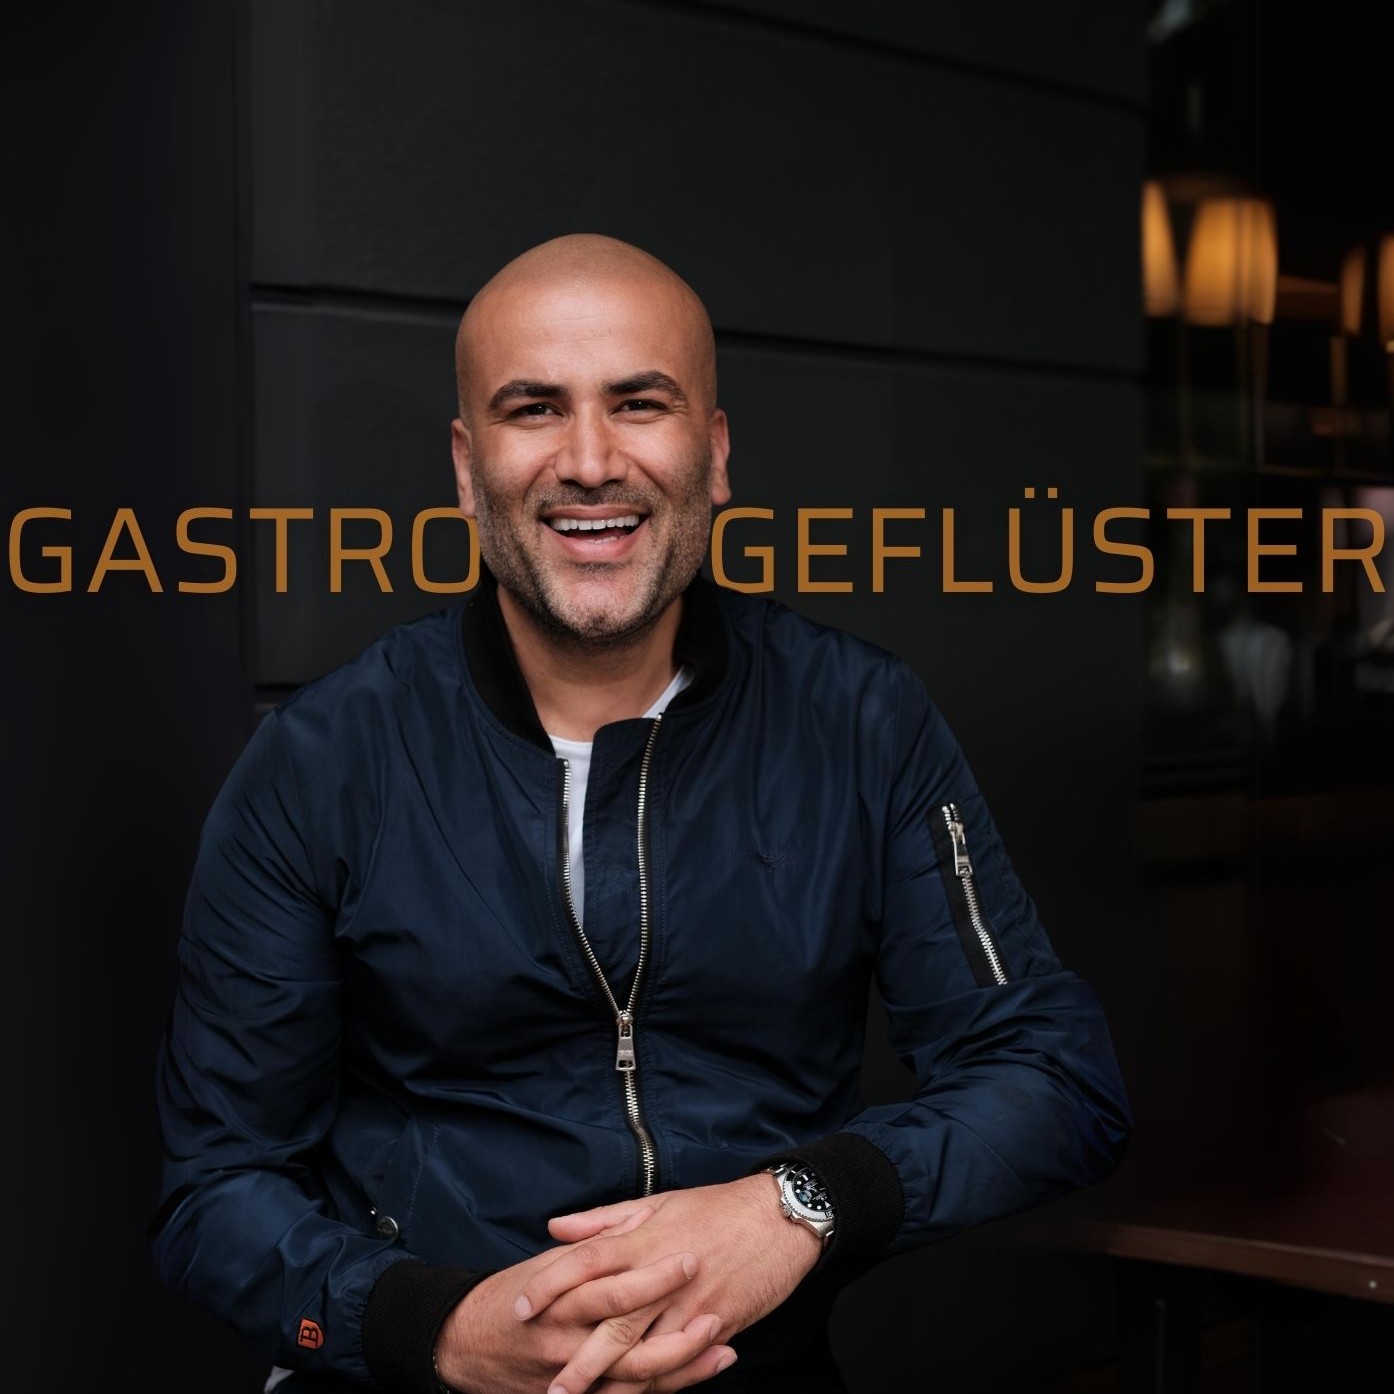 Gastro-Geflüster Podcast by Kemal Üres